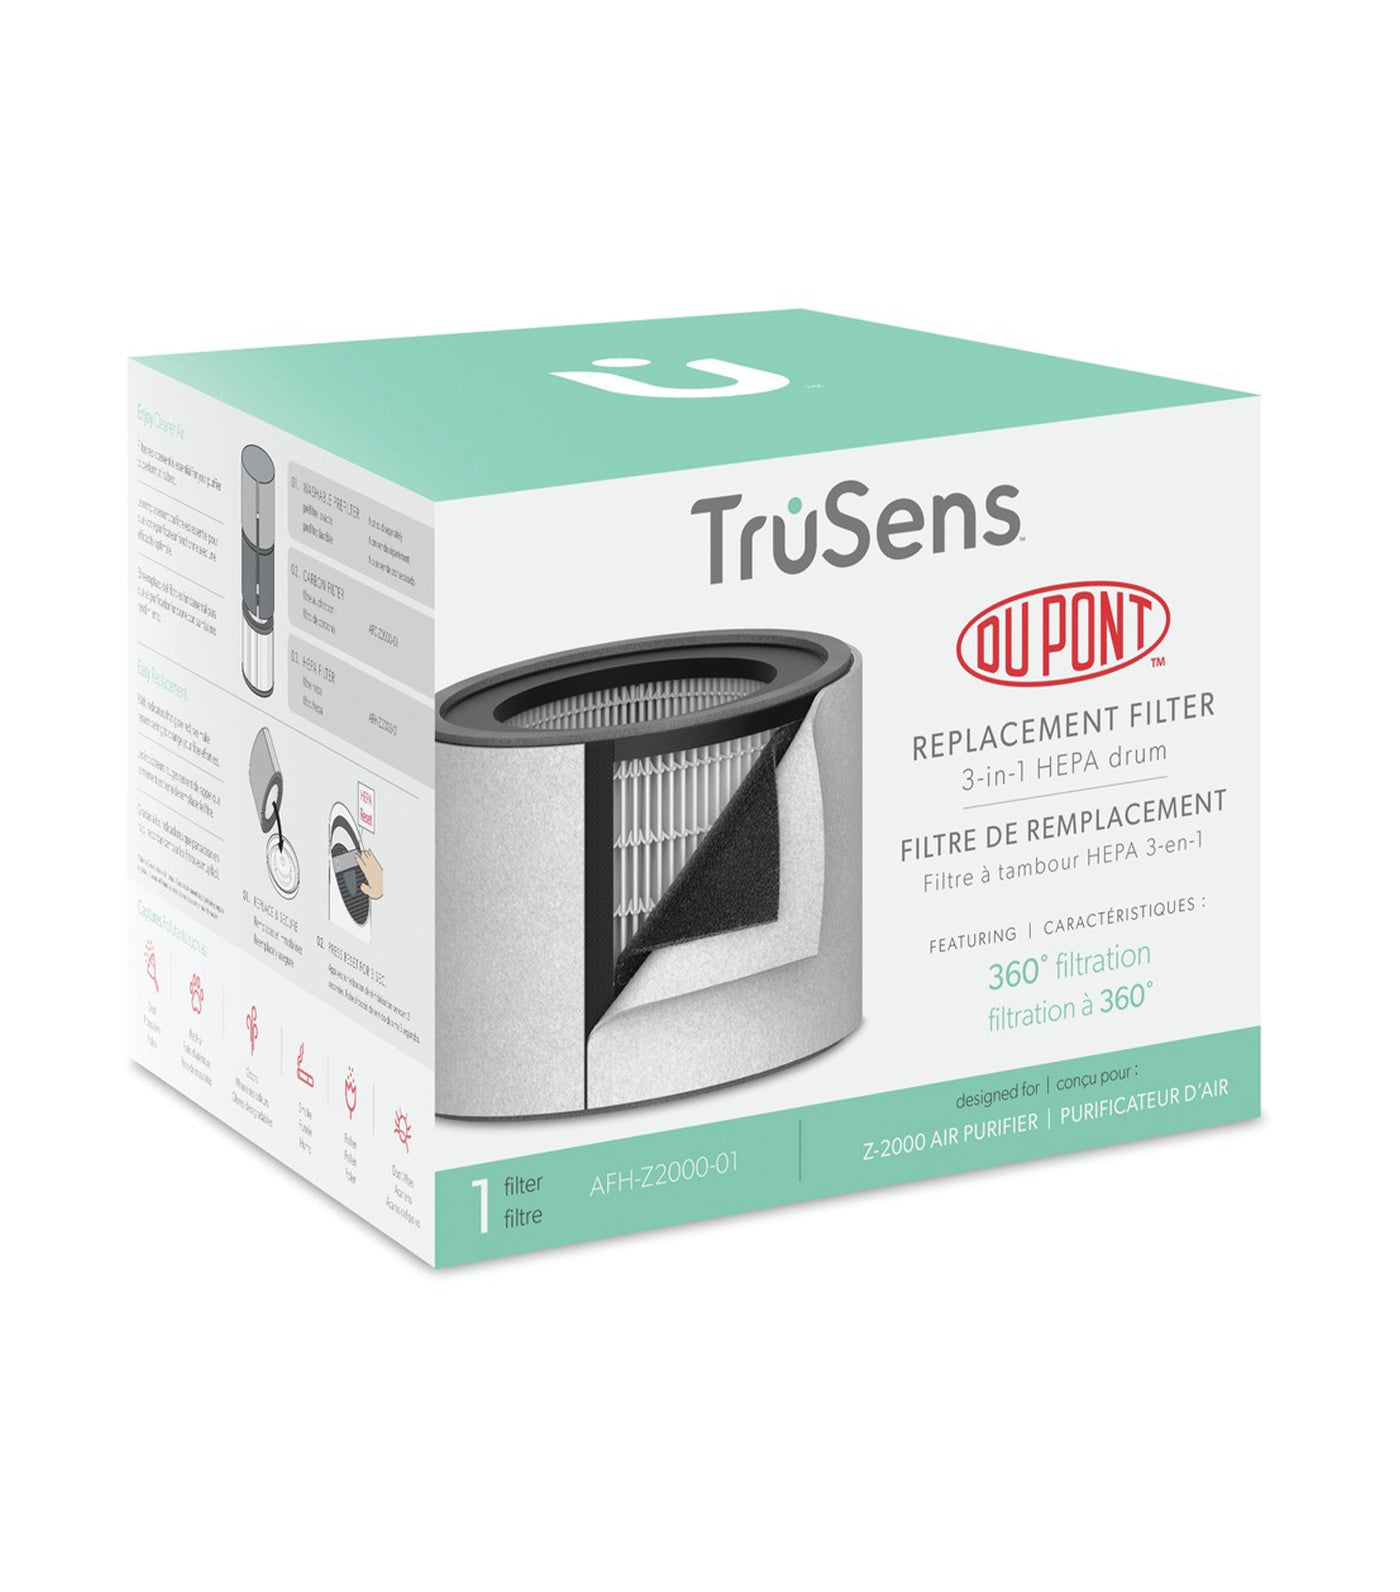 TruSens Free Medium HEPA Filter Promo